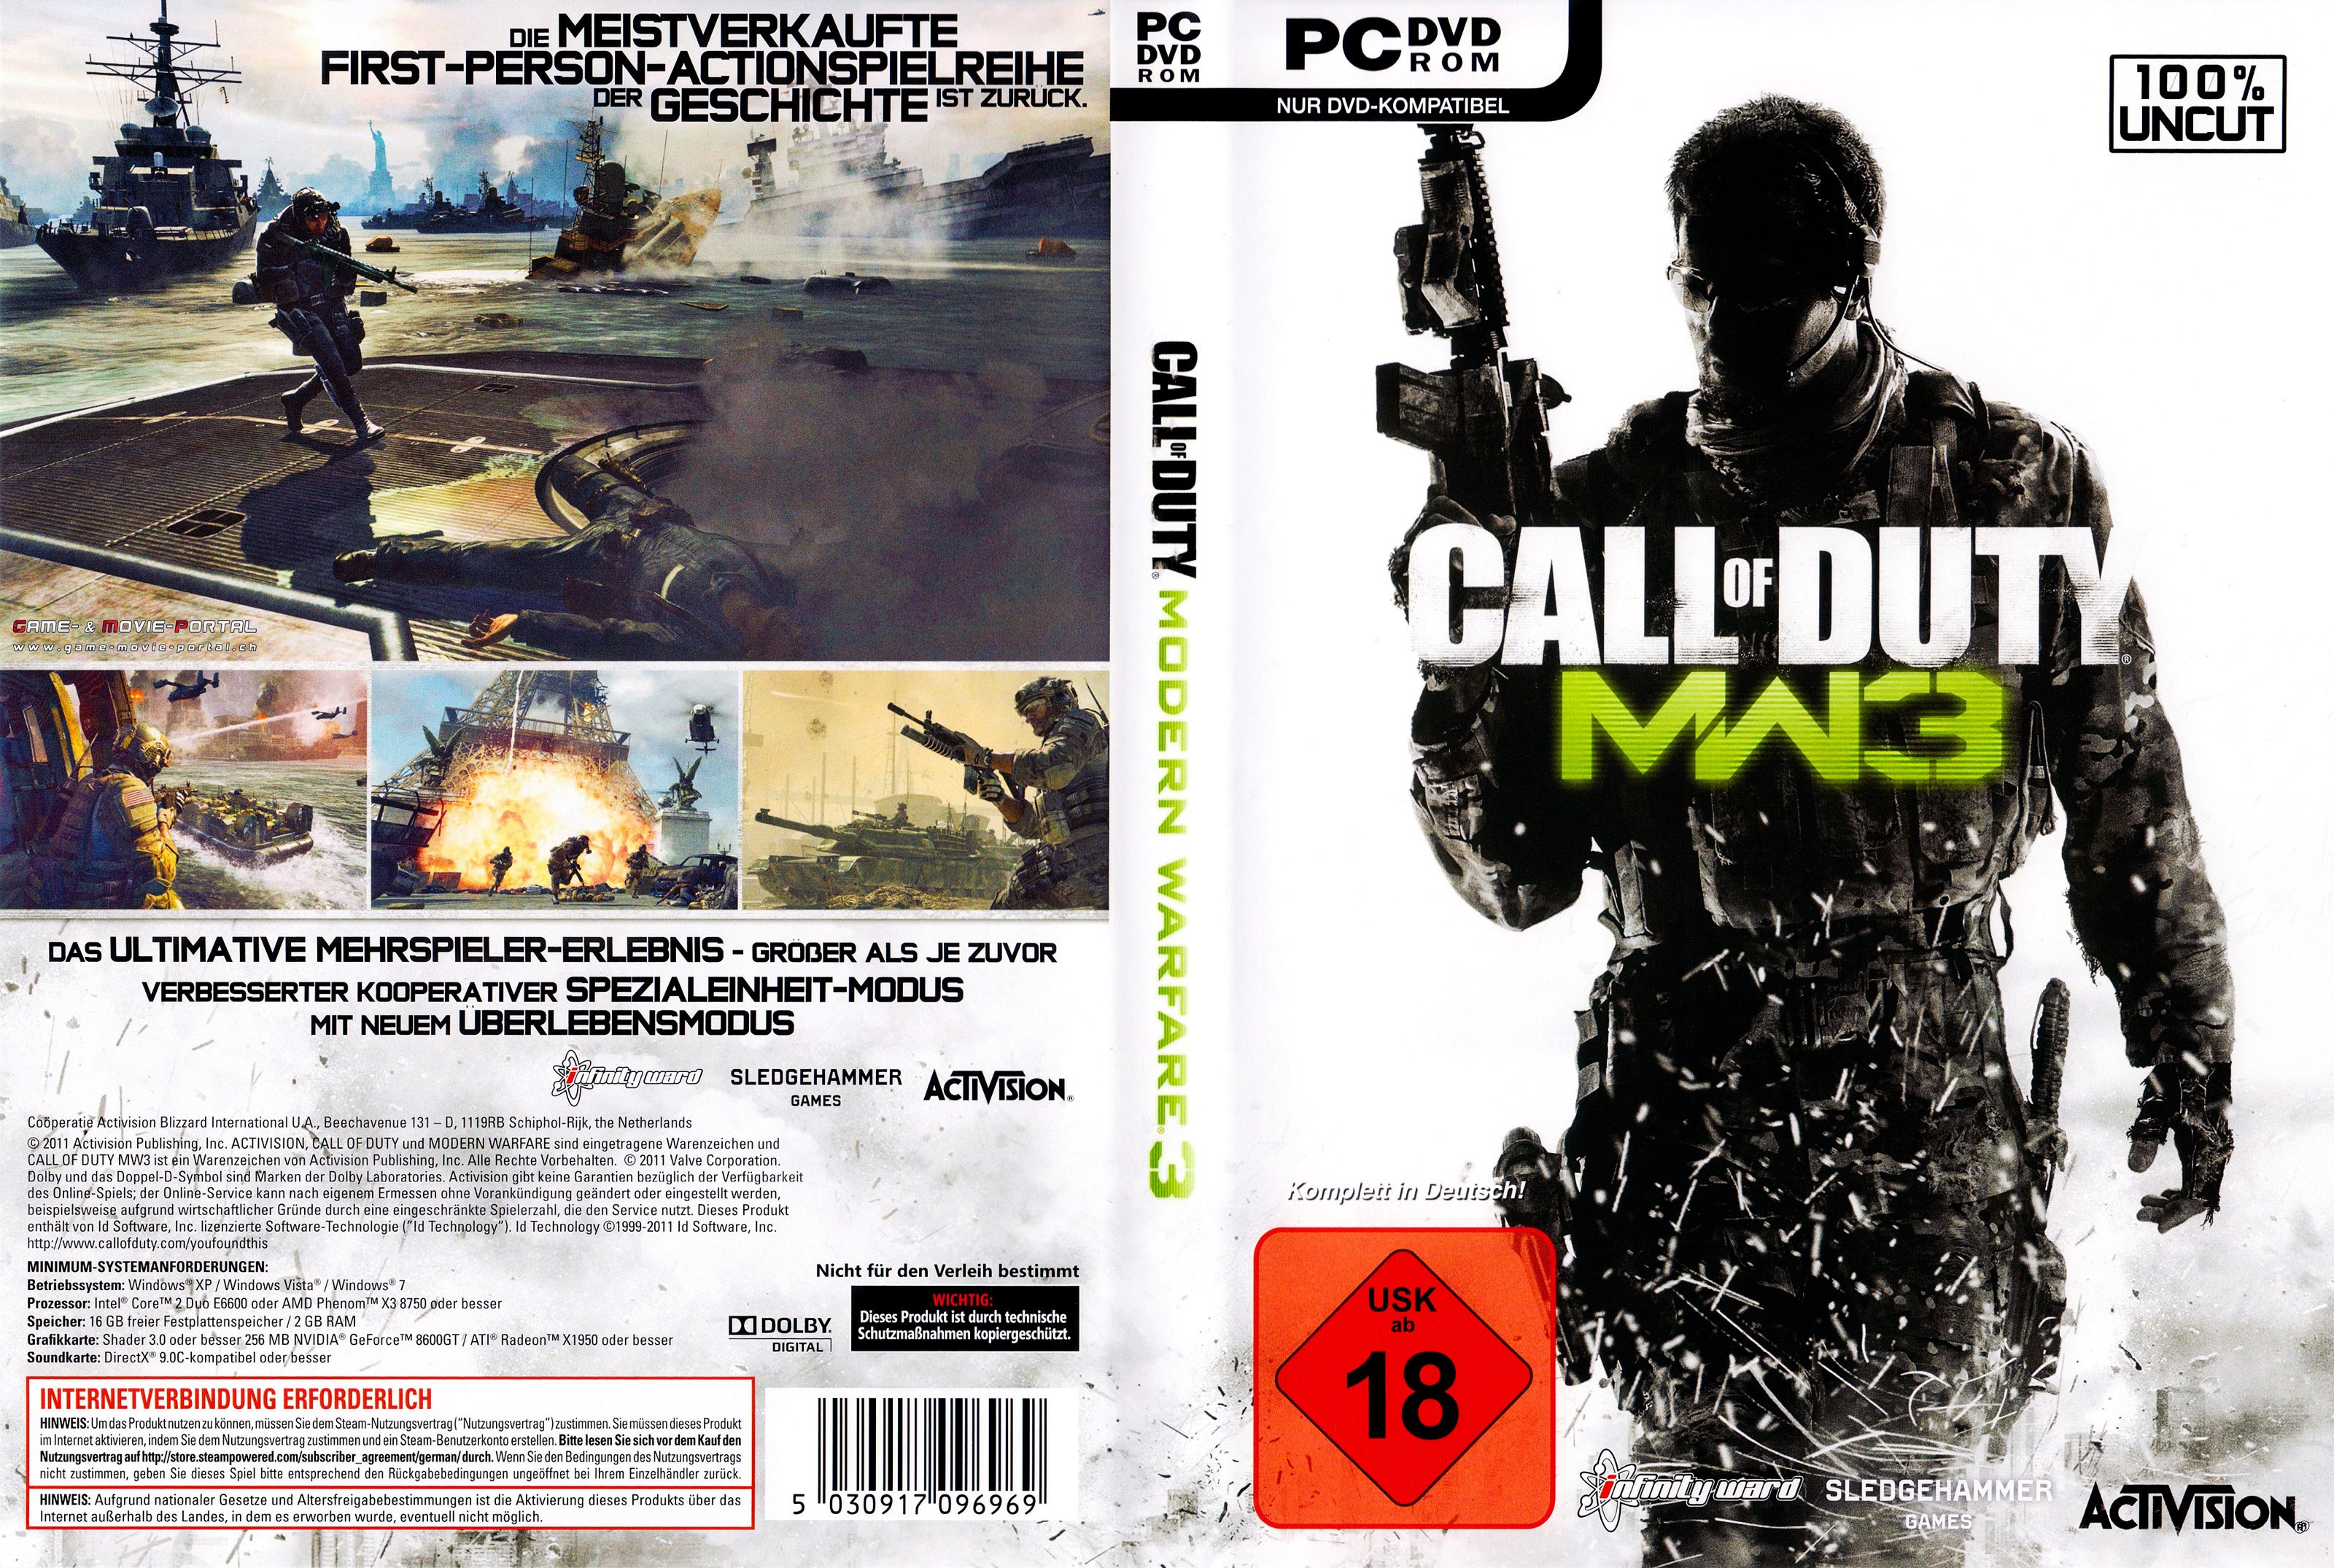 Диск игры call of duty. Call of Duty Modern Warfare 3 диск PC. Call of Duty 3 диск. Обложка Call of Duty MW 2019 компакт диск. Call of Duty 4 Modern Warfare диск.